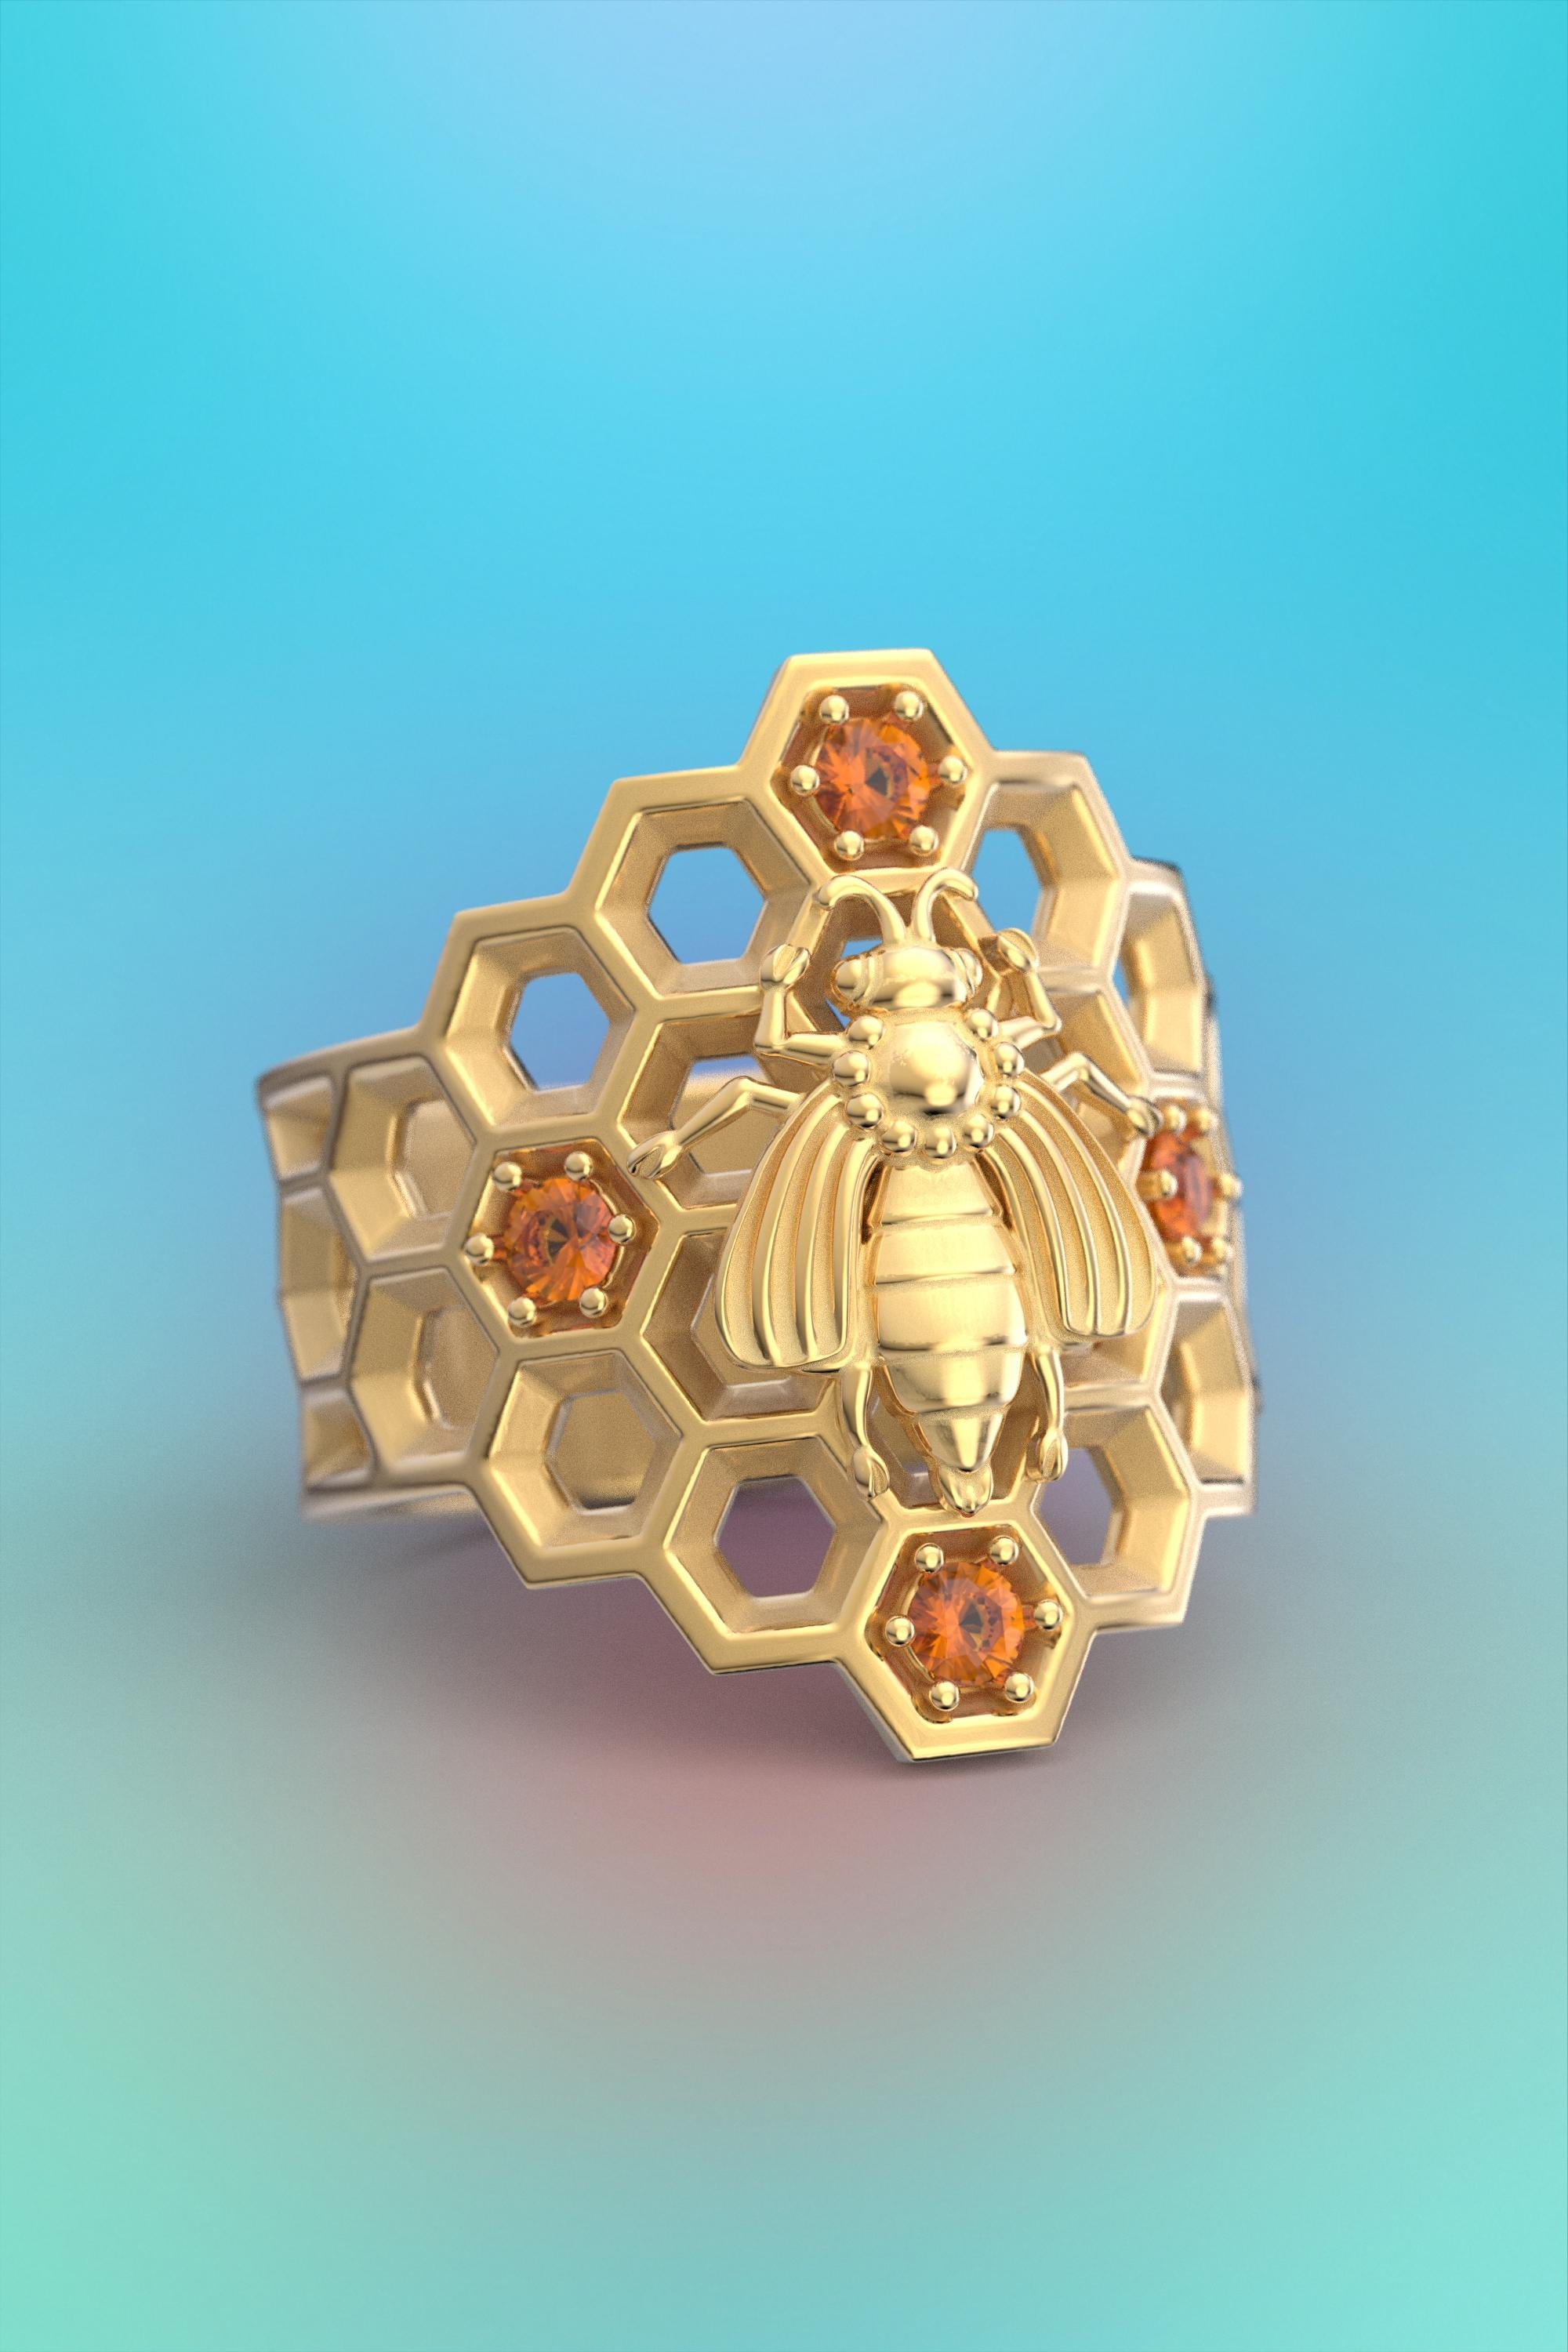 For Sale:   Honeycomb Bee Ring in 14k Solid Gold with natural Orange Spessartite Garnet 9